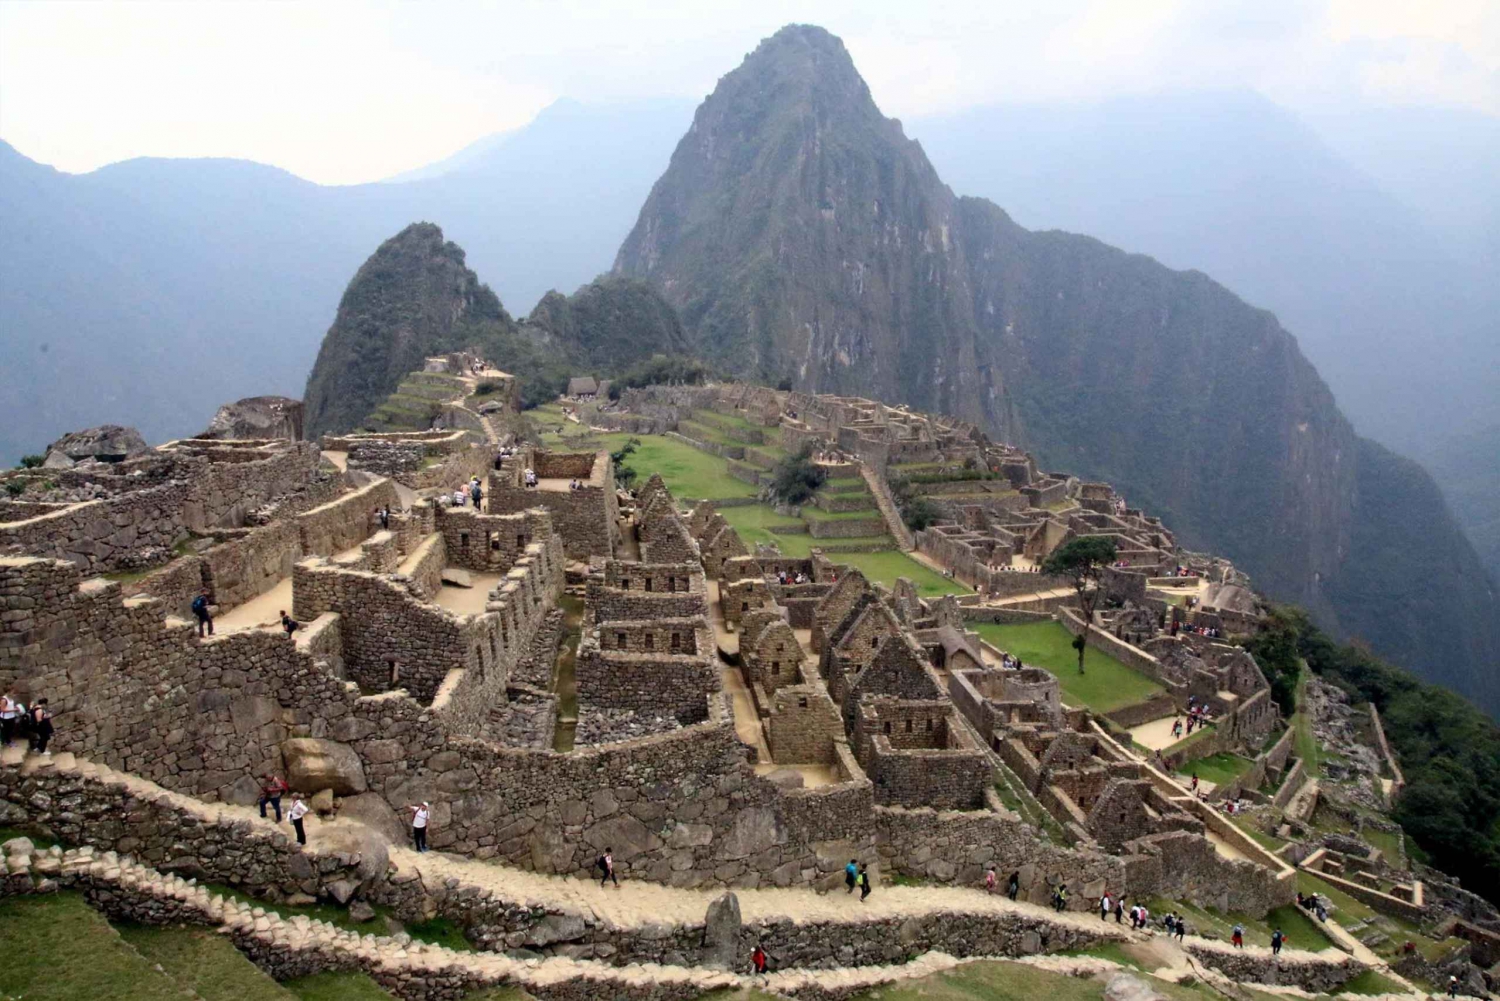 2-dages udflugt til Machu Picchu langs Abra Málaga-ruten